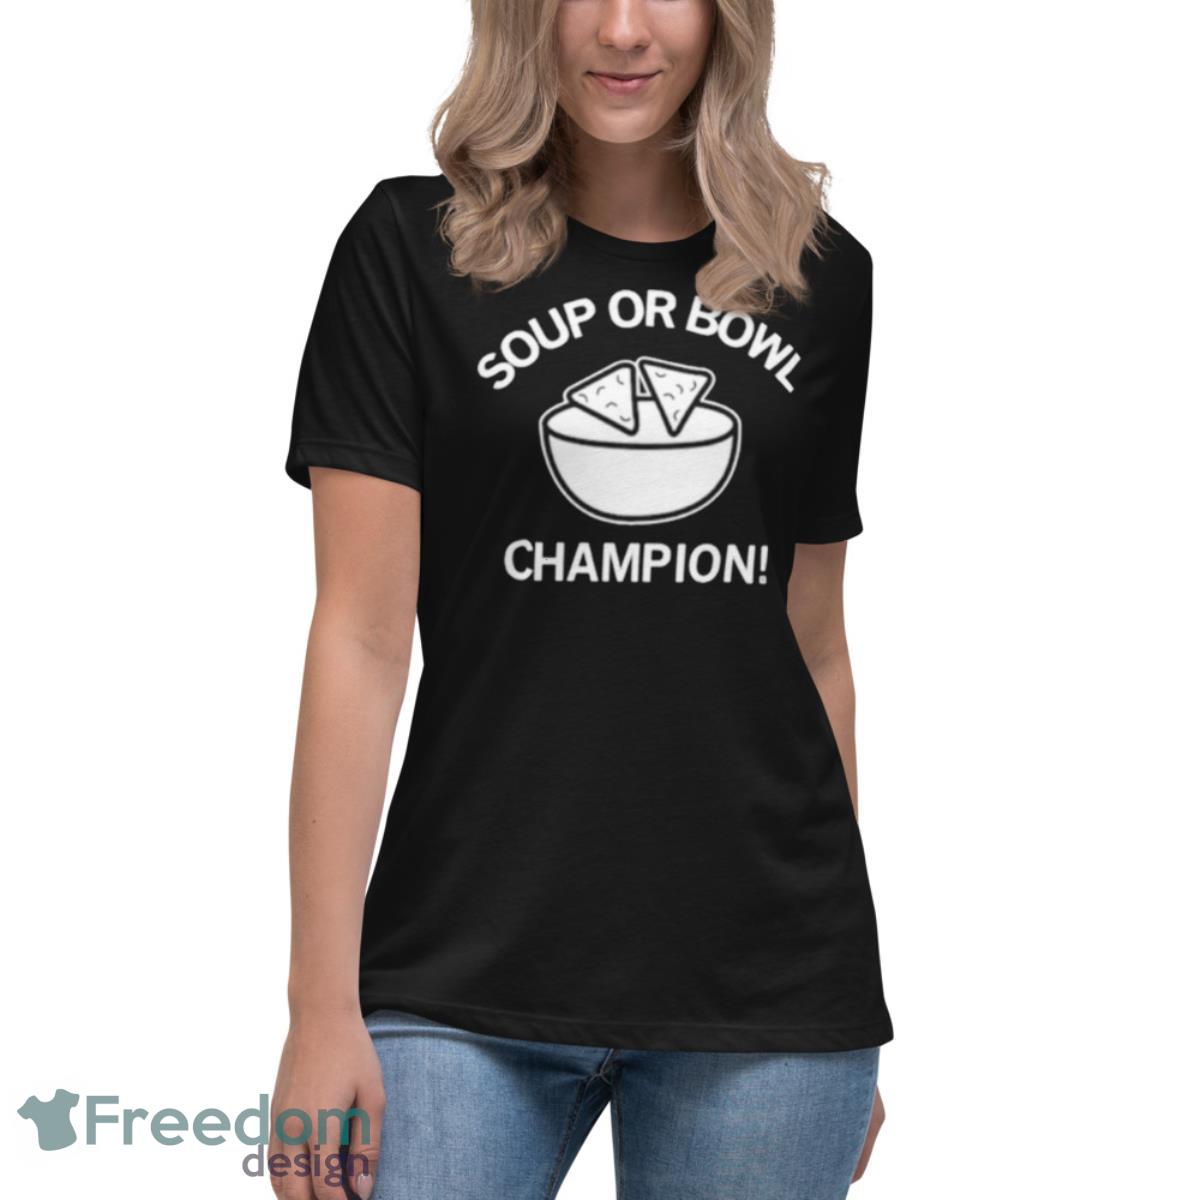 Soup or bowl Champion shirt